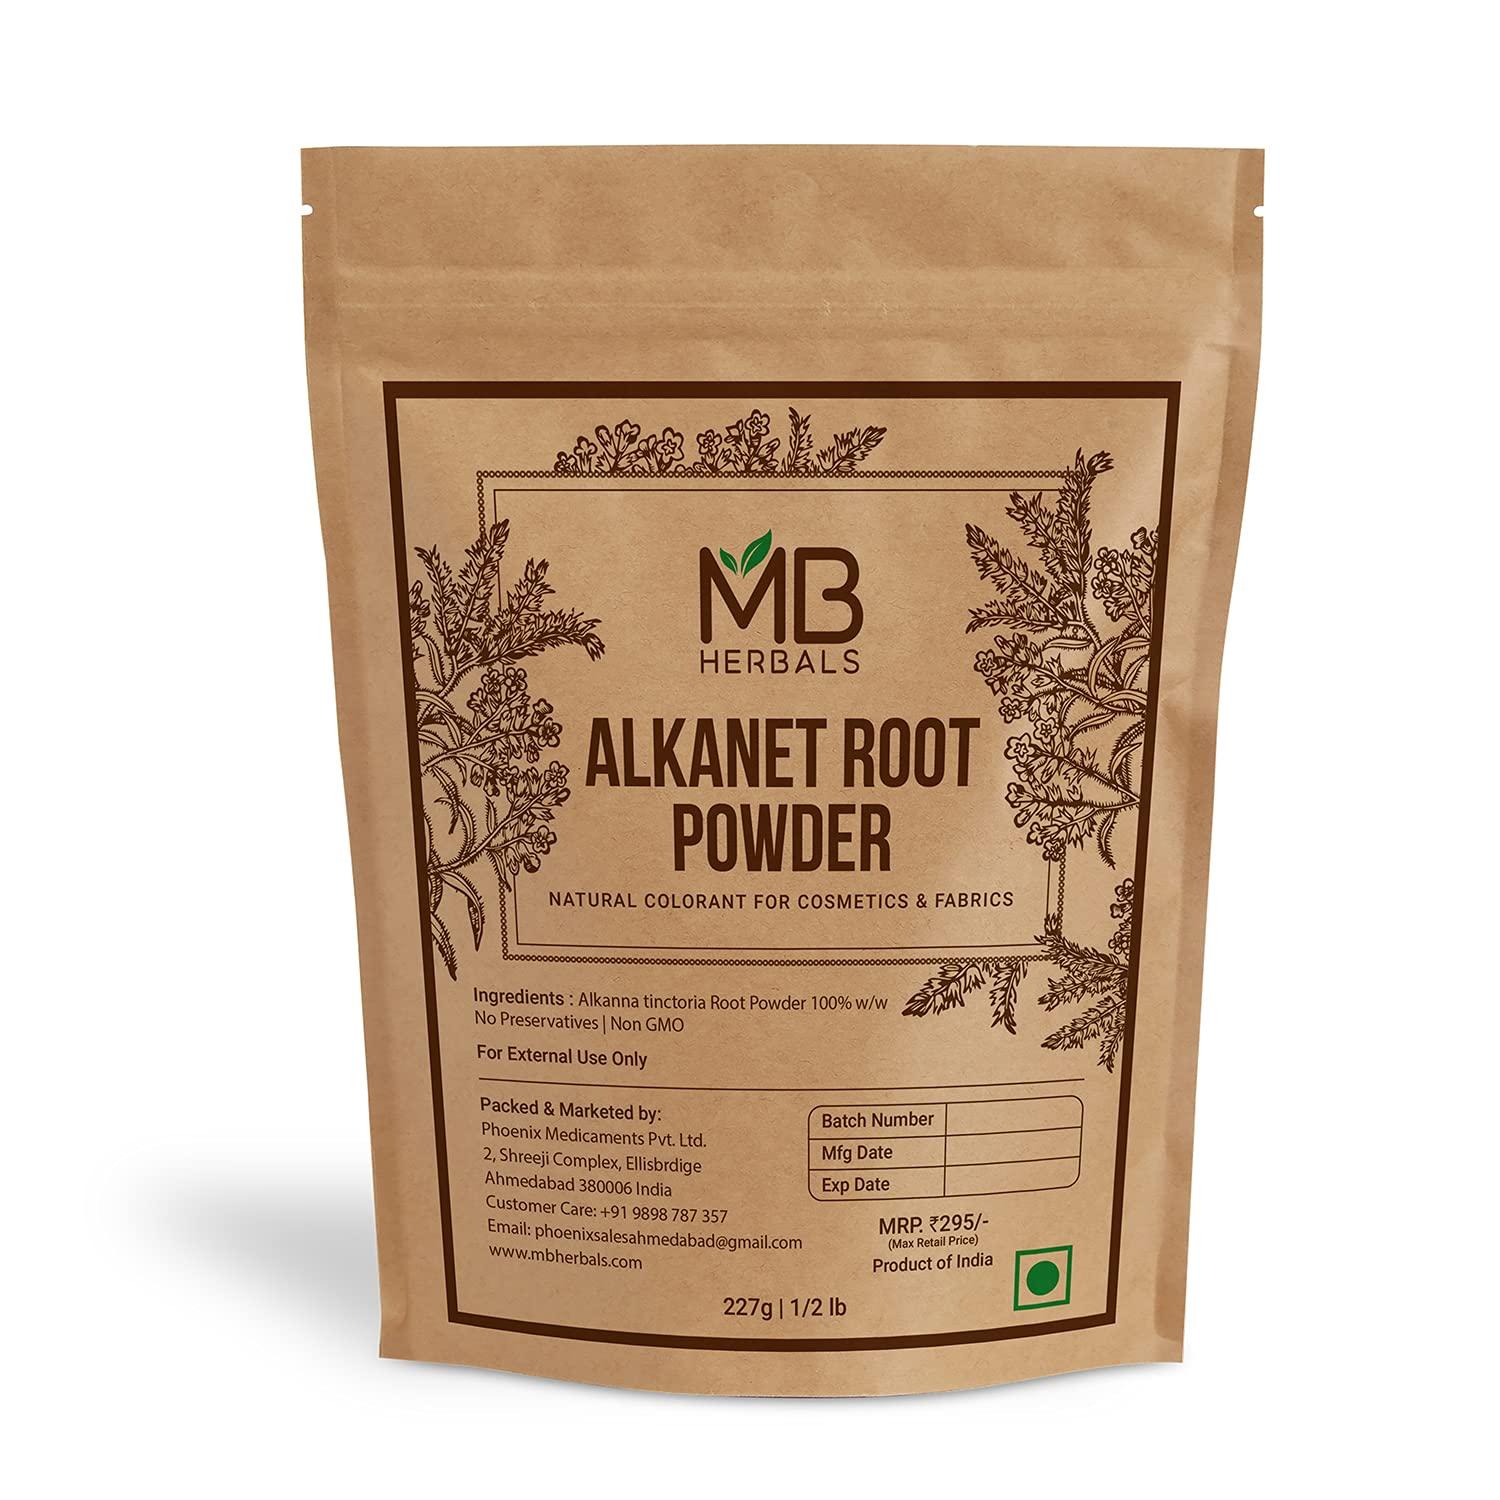 Alkanet Root Powder - 7 Oz / 200gm, (Ratanjot/Arnebia Nobilis),, Beneficial To Help In Skin Problem